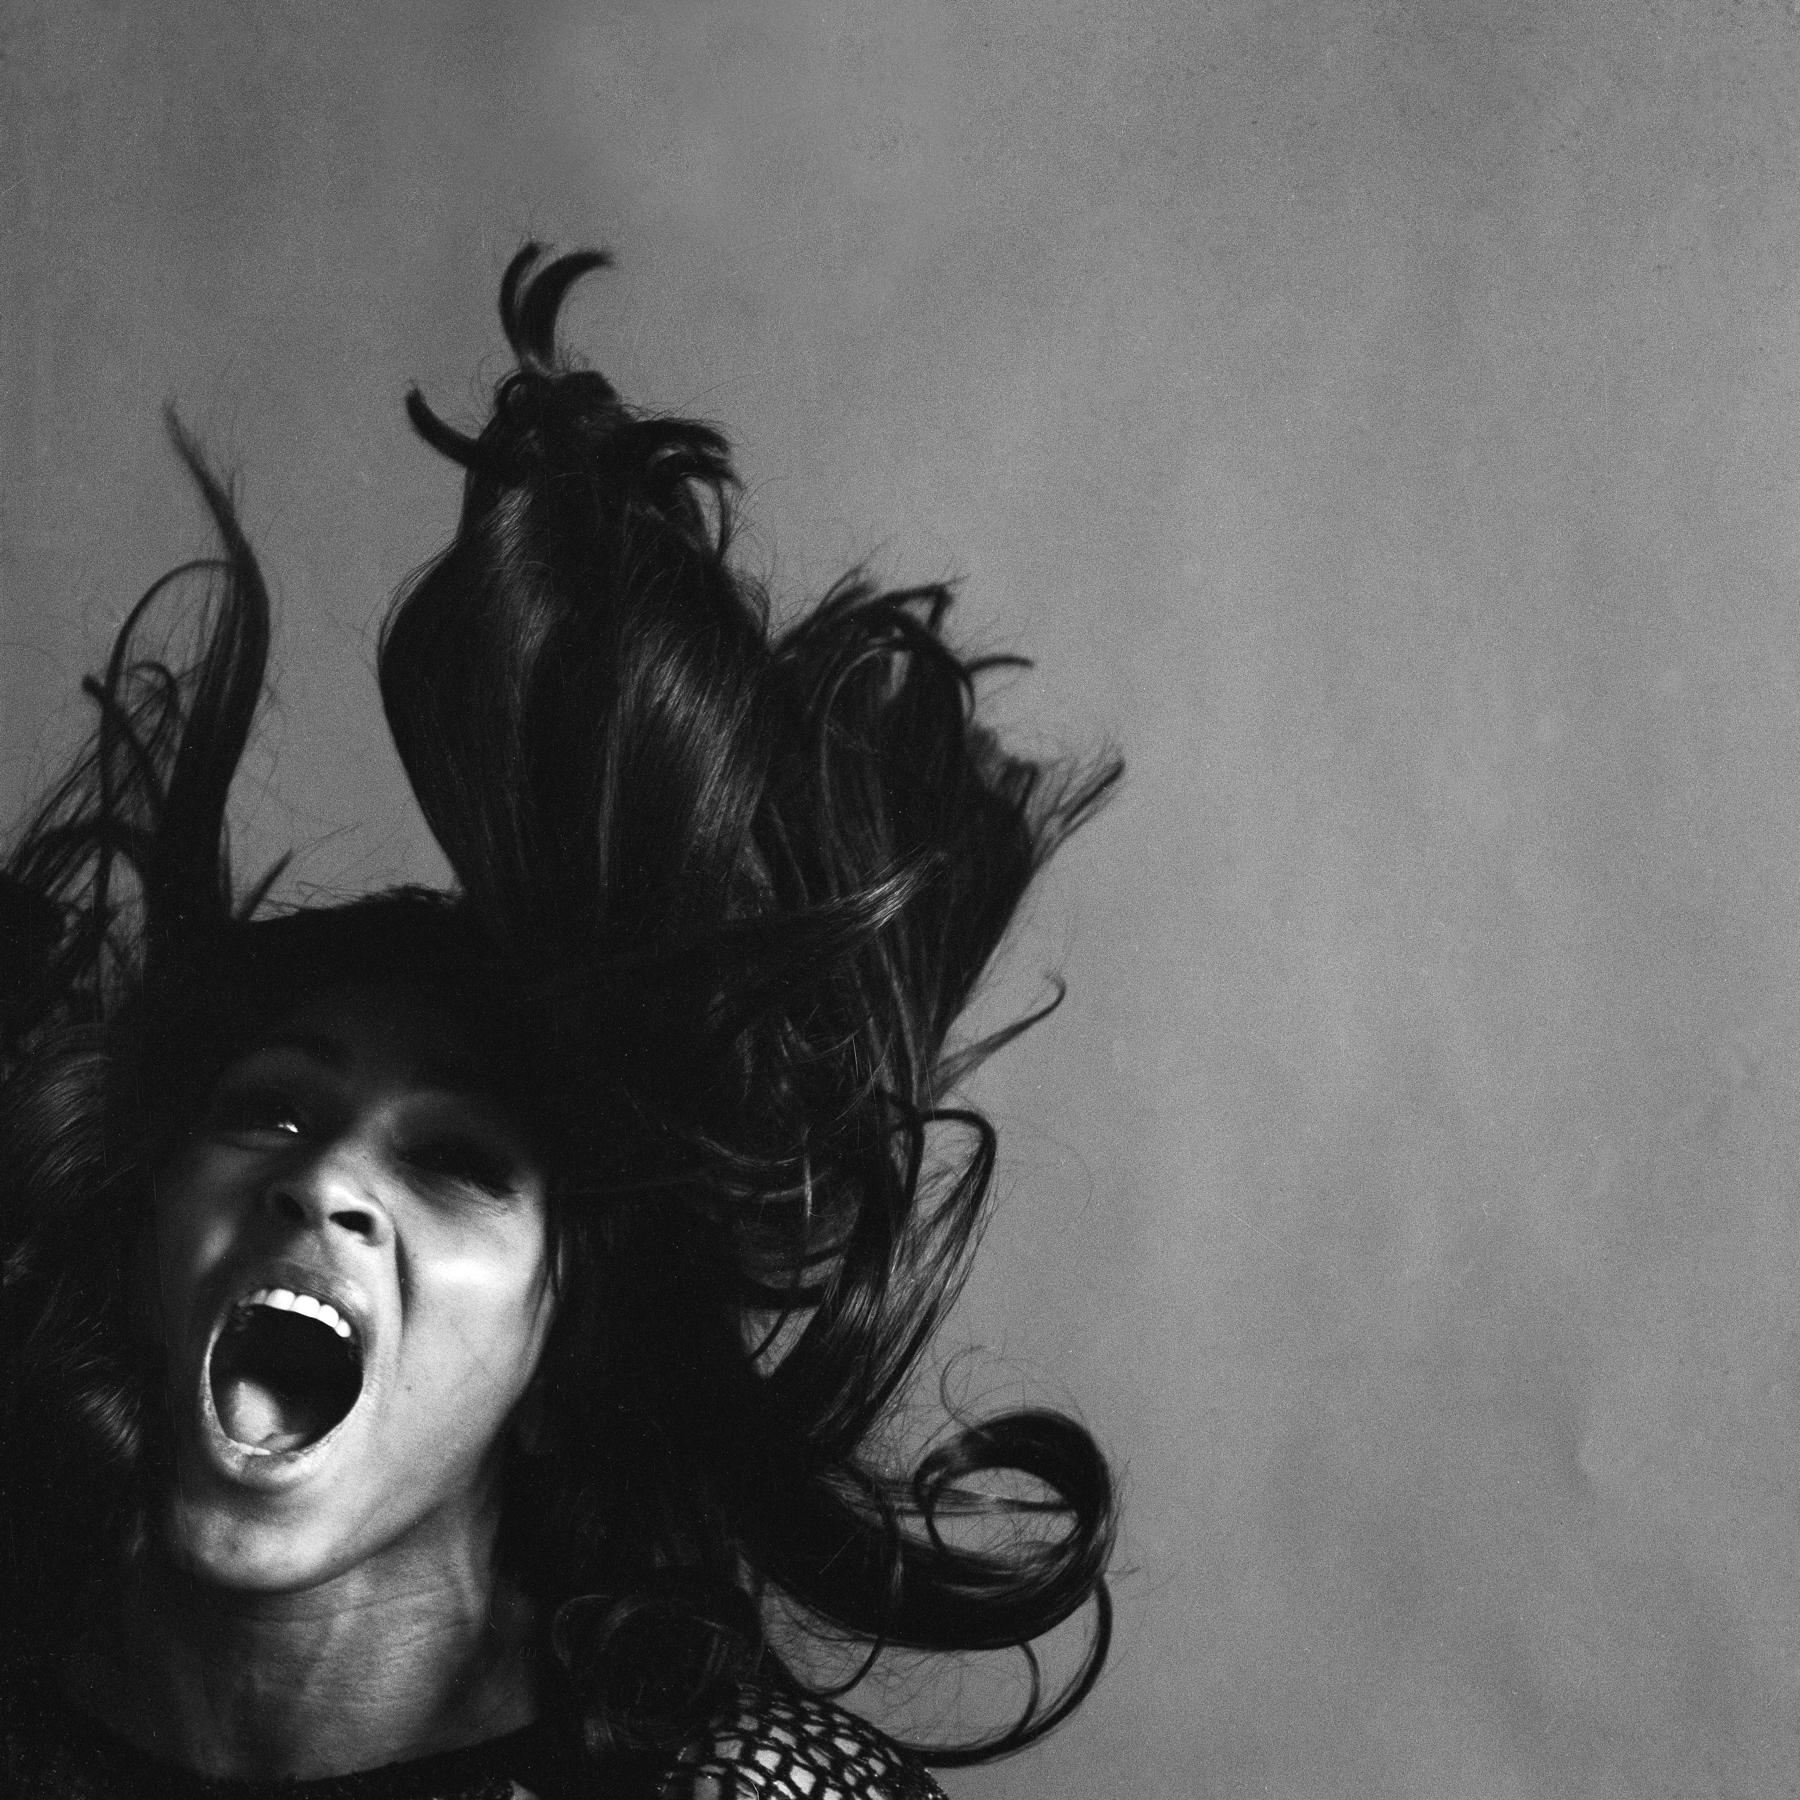 Jack Robinson Portrait Photograph - Tina Turner "Wild Child", Silver Gelatin Print